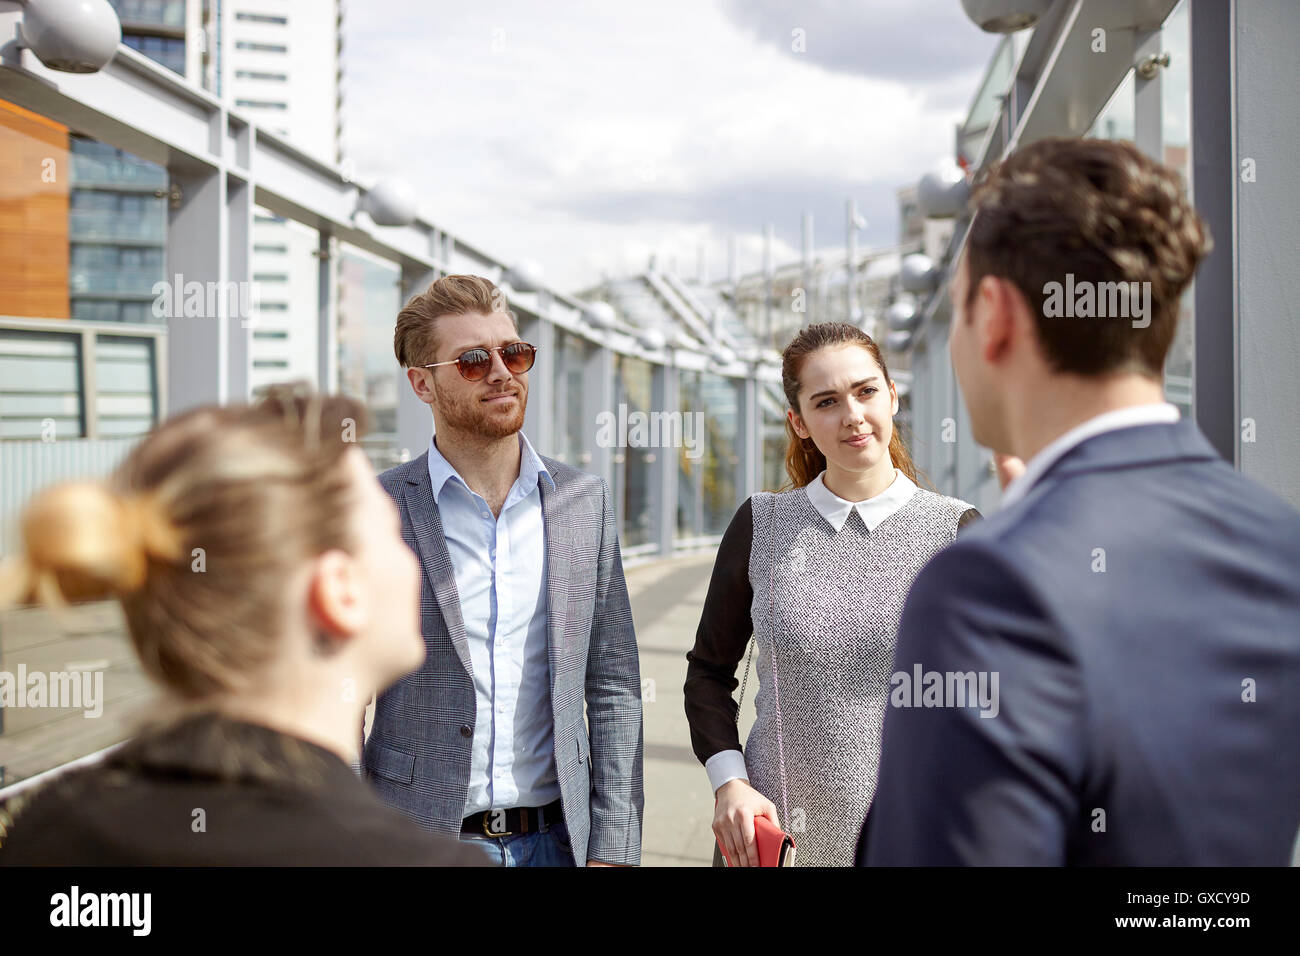 Businessmen and businesswomen having discussion on city footbridge, London, UK Stock Photo